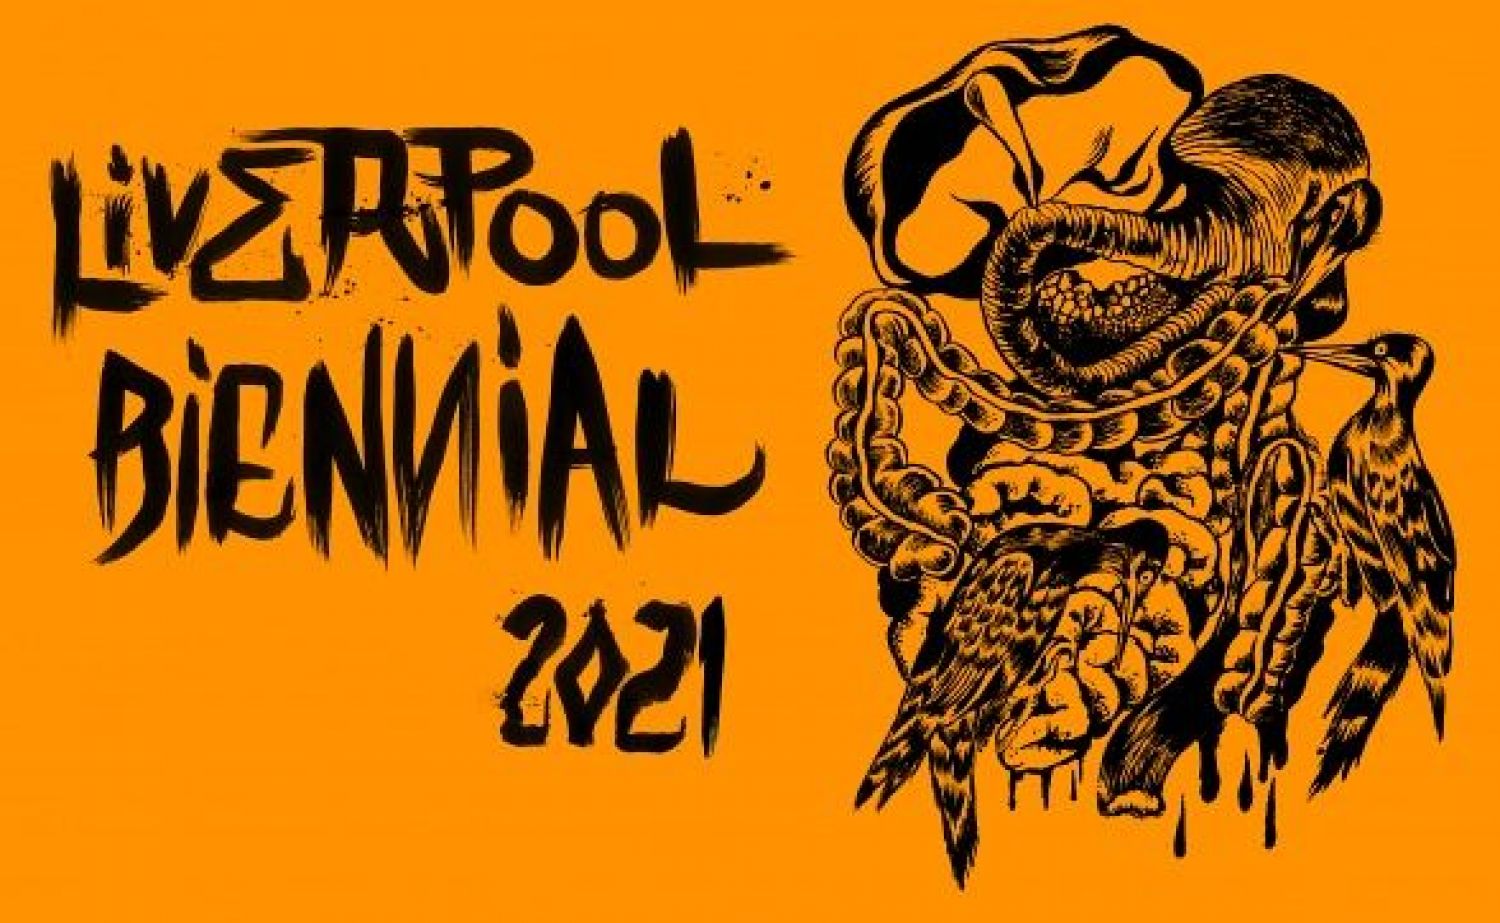 Liverpool Biennial 2021